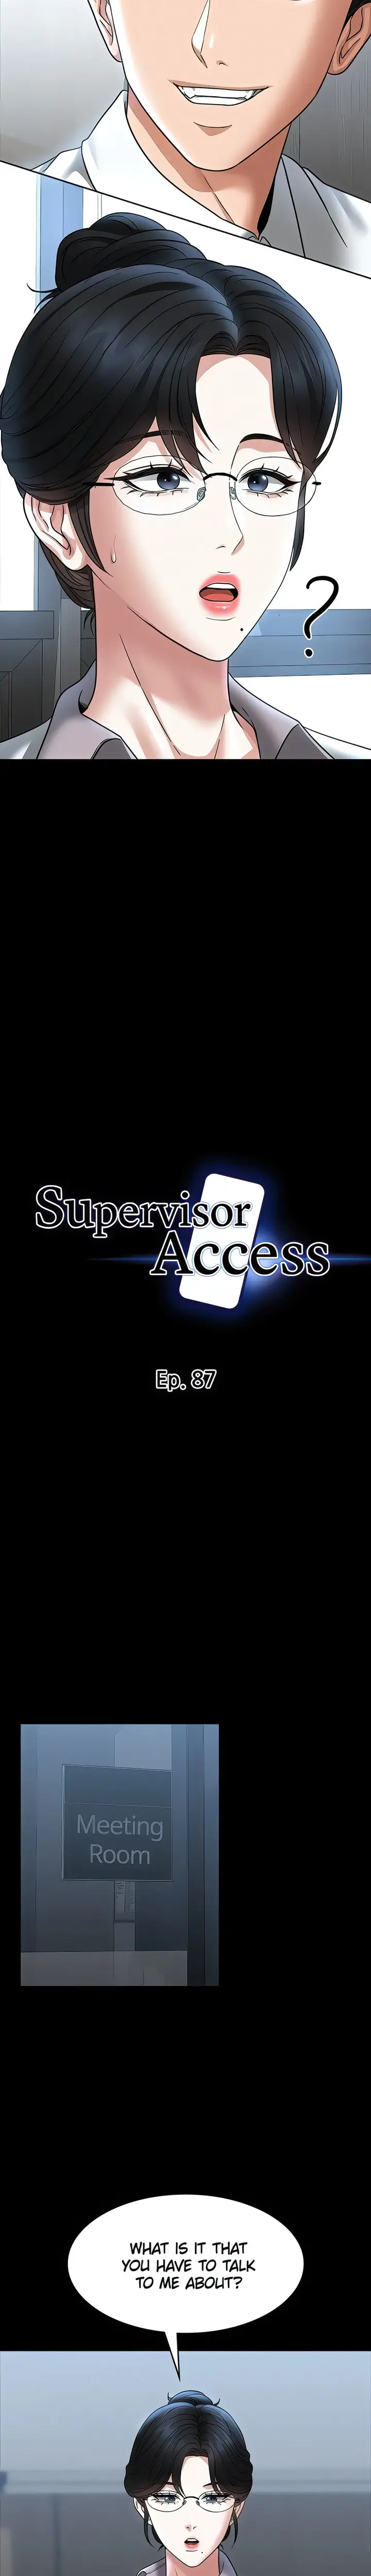 supervisor-access-chap-87-1